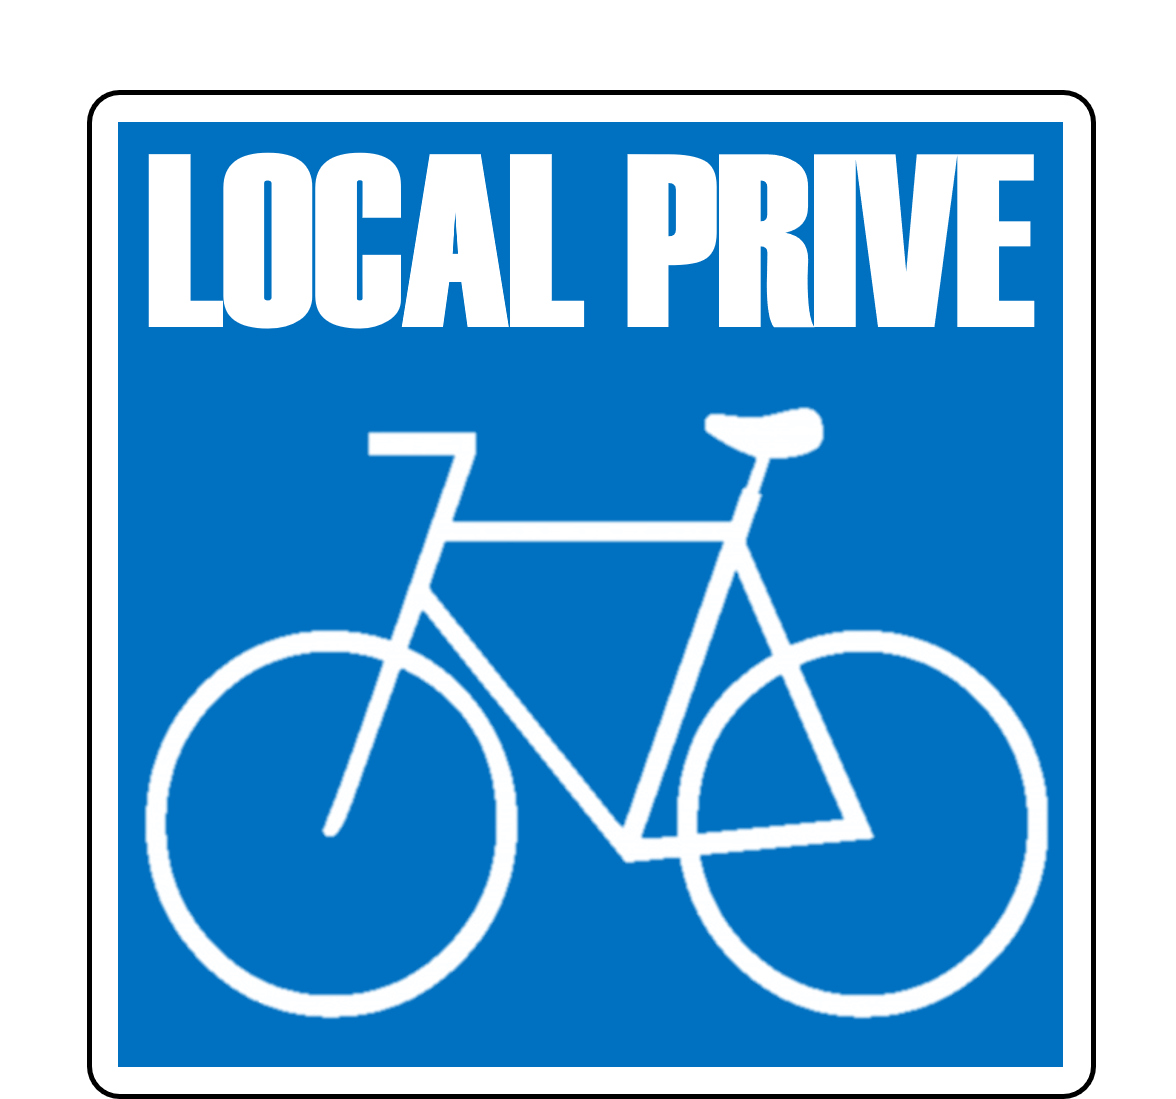 Garage à Vélo privé